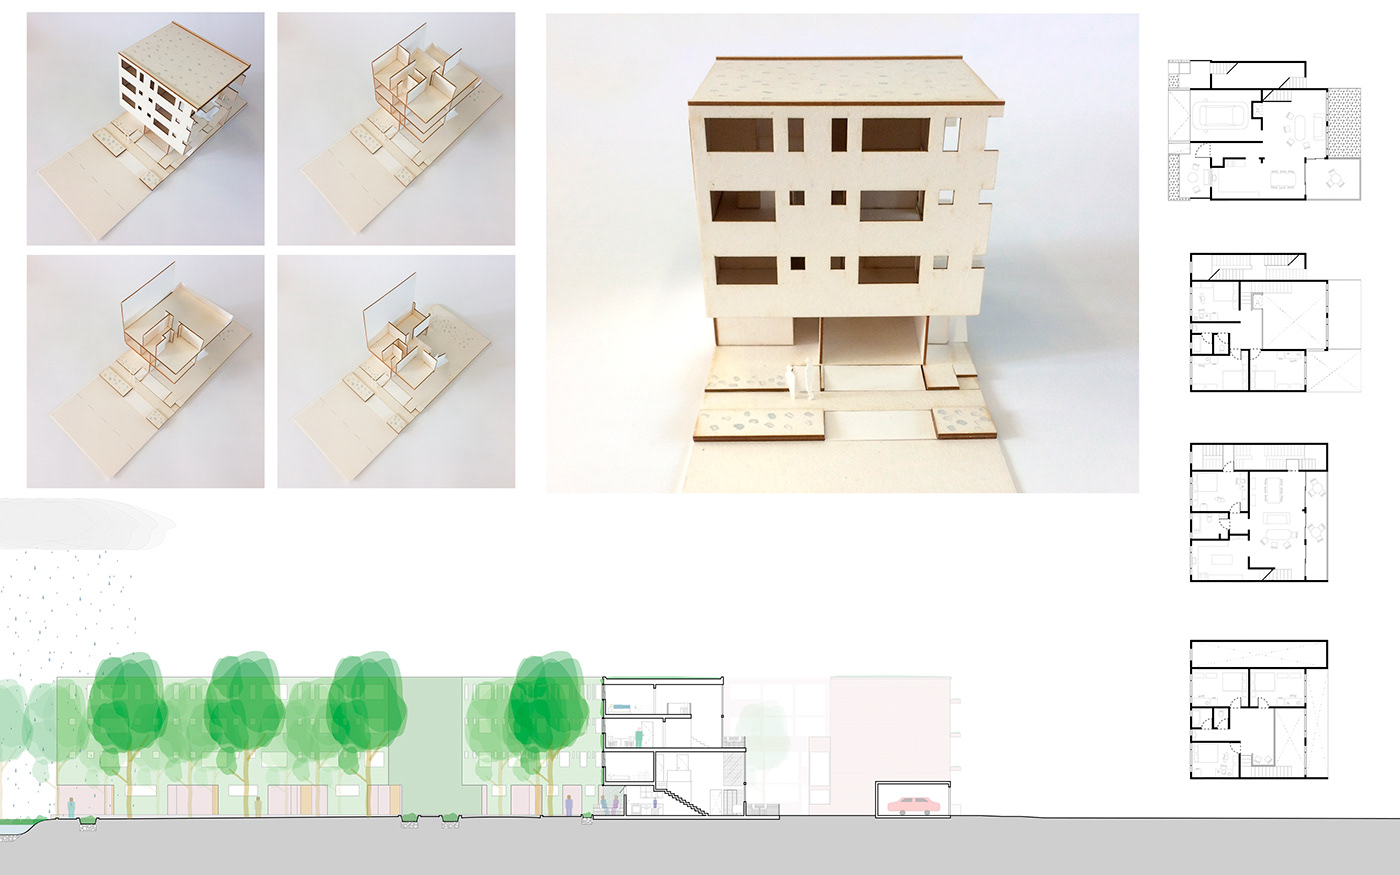 Sustainability Urban housing architecture green facade community